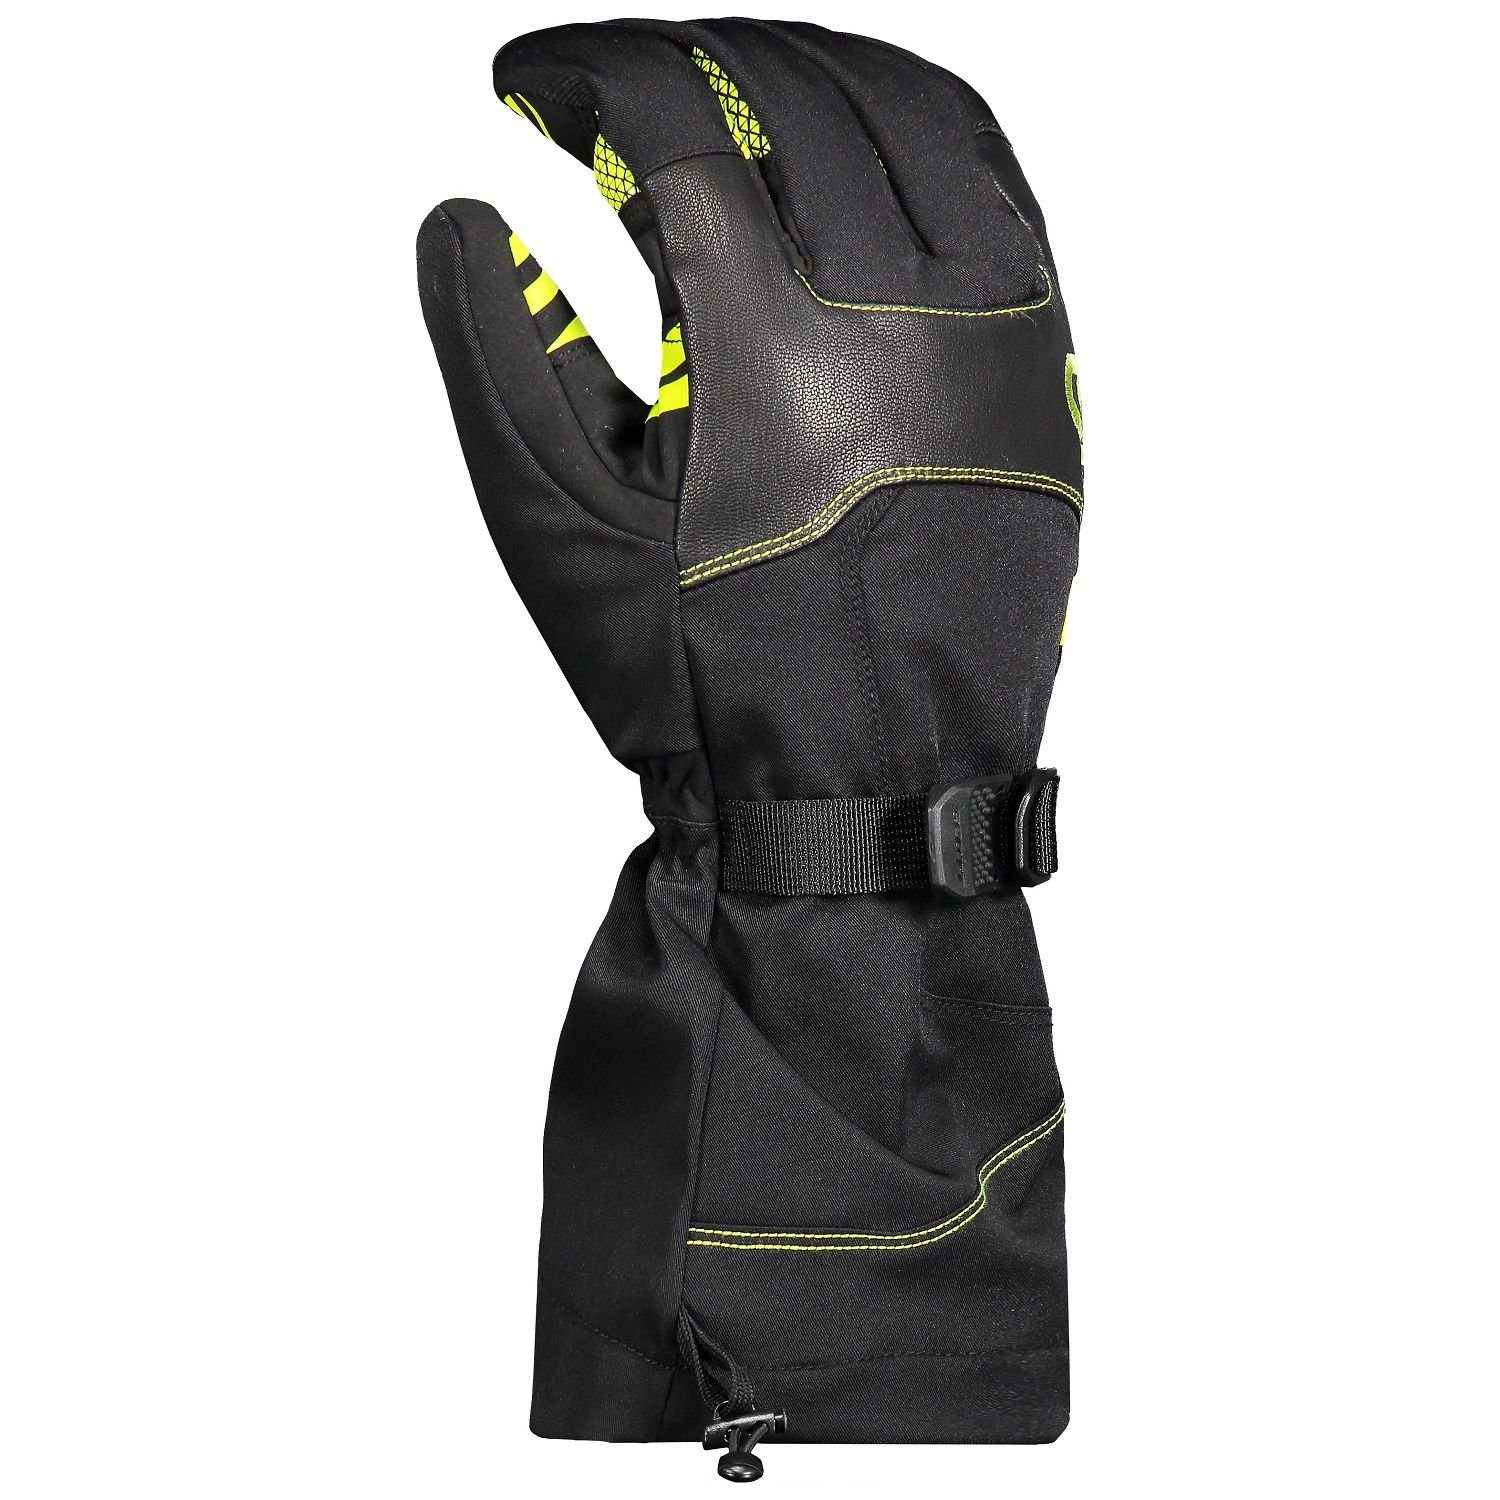 Scott Motorradhandschuhe SCOTT Handschuhe MX schwarz/neongrün Cubrick